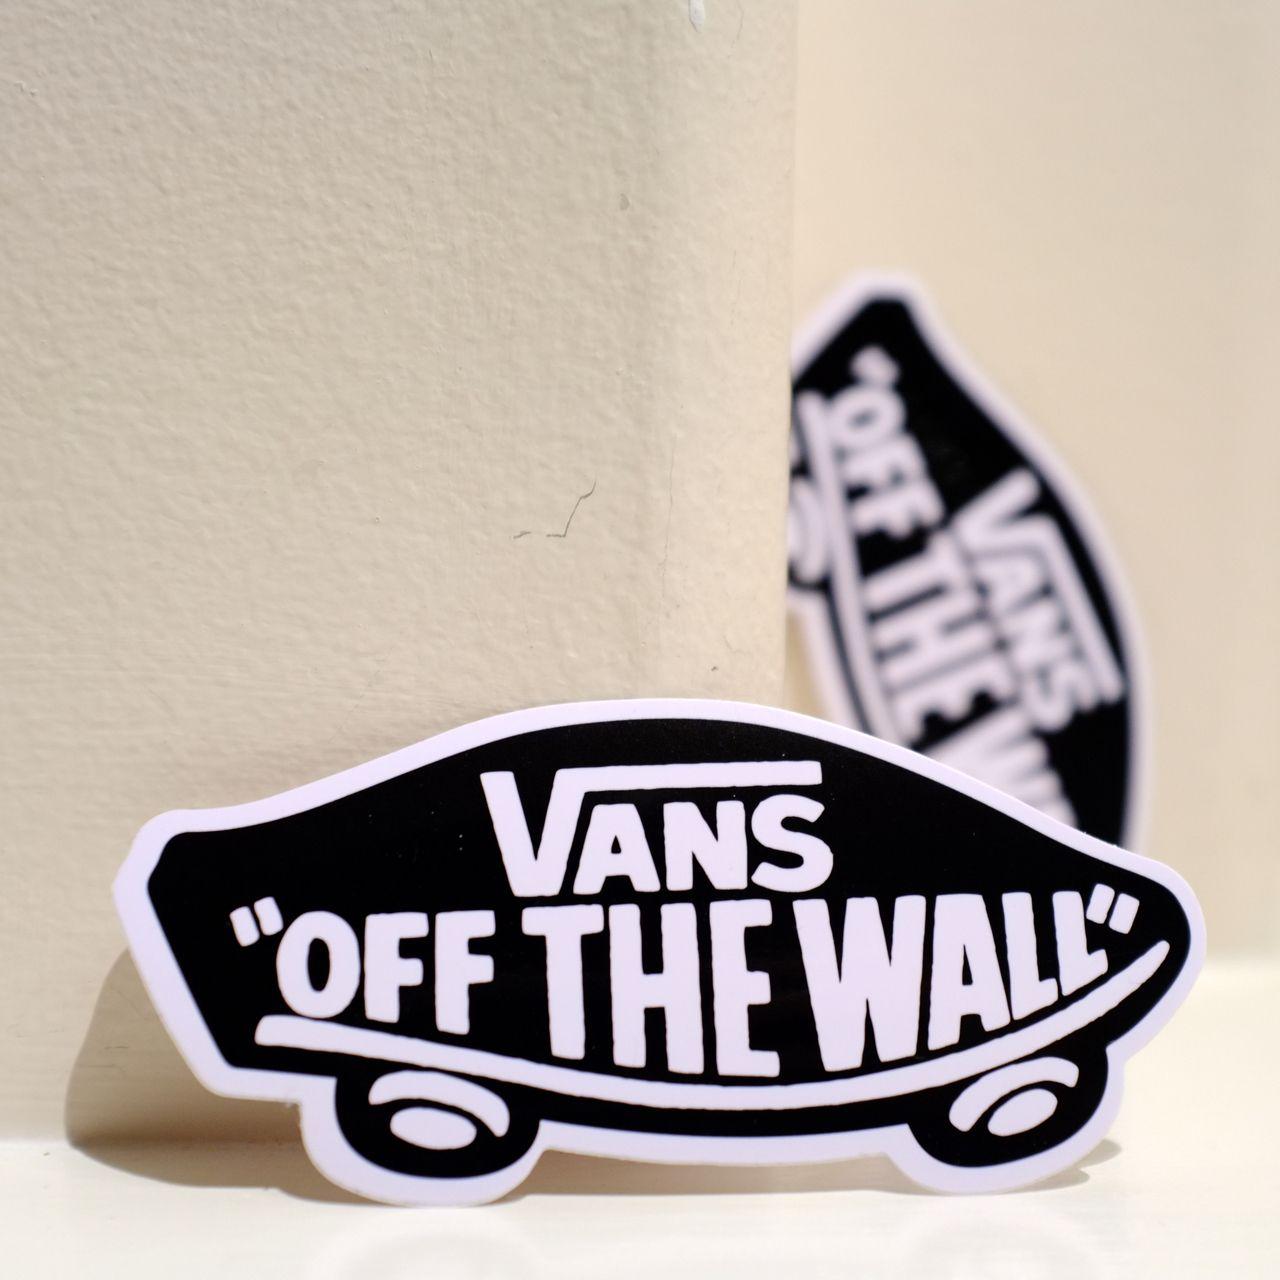 Off the Wall Logo - 4834 Black VANS OFF THE WALL Logo Shop Display 4x2